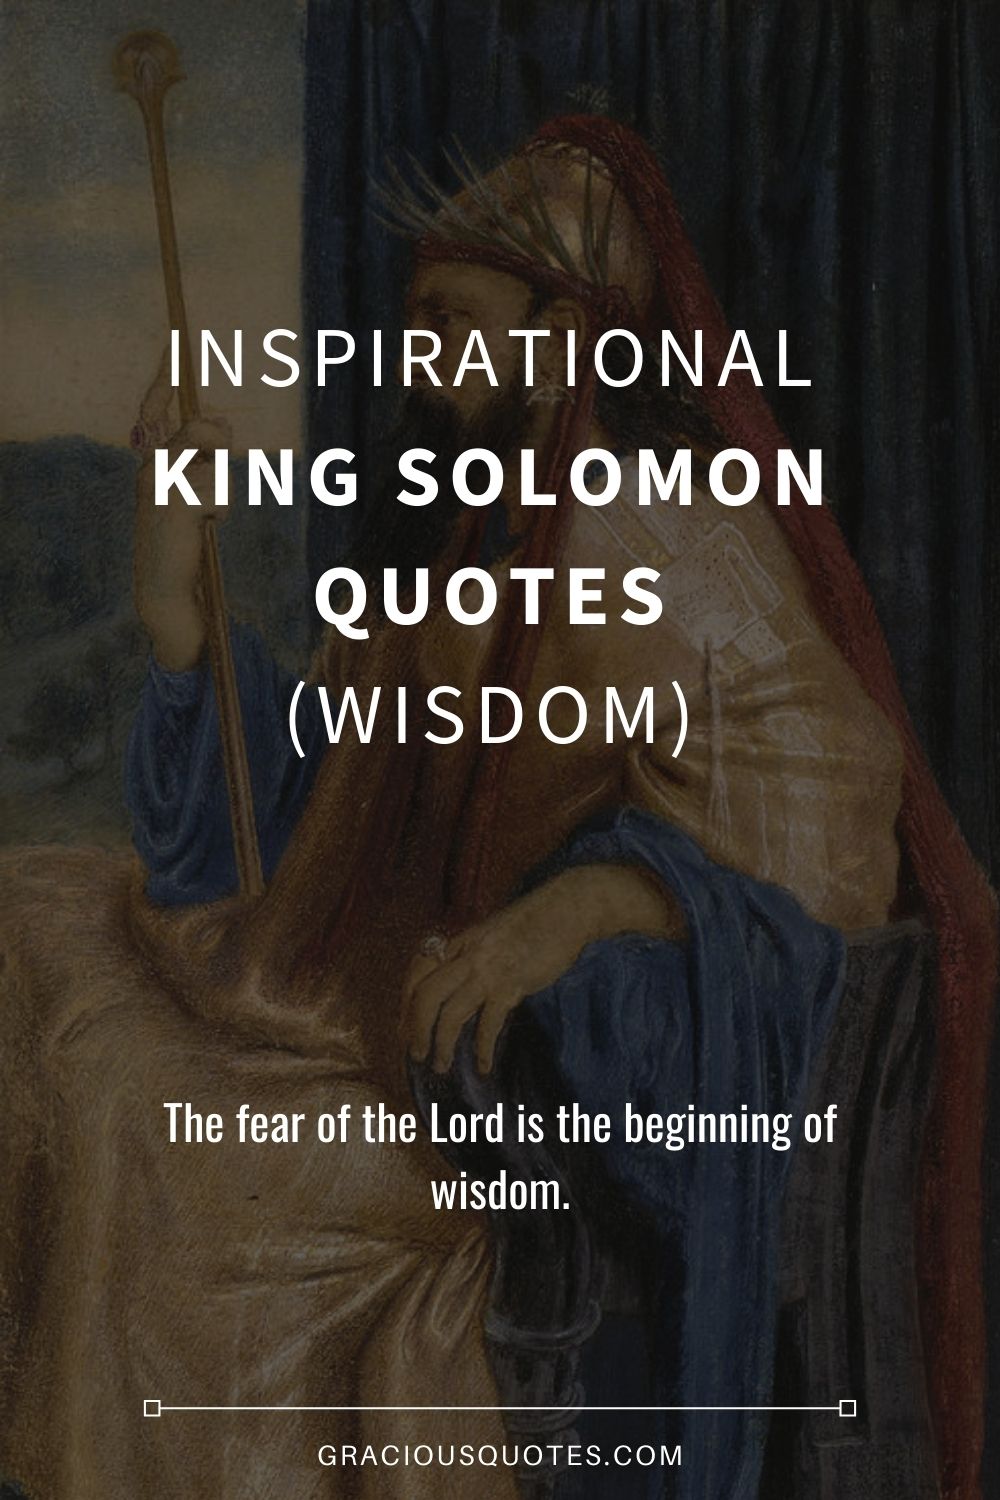 Inspirational King Solomon Quotes (WISDOM) - Gracious Quotes